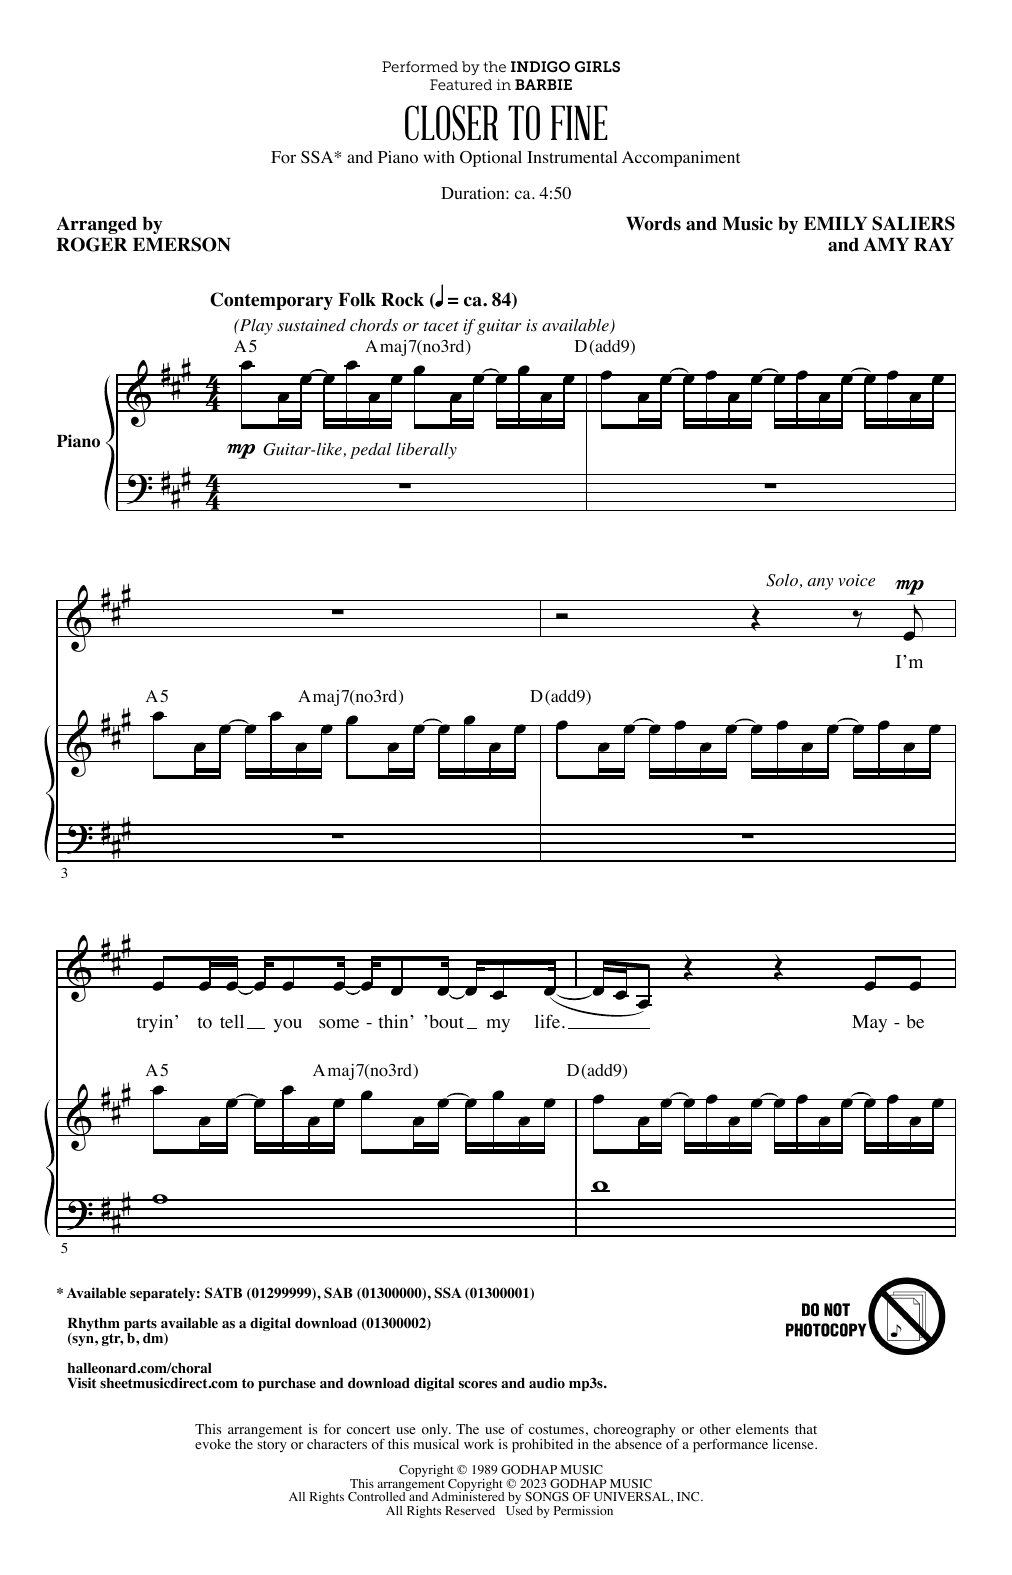 Indigo Girls Closer To Fine (arr. Roger Emerson) Sheet Music Notes & Chords for SAB Choir - Download or Print PDF